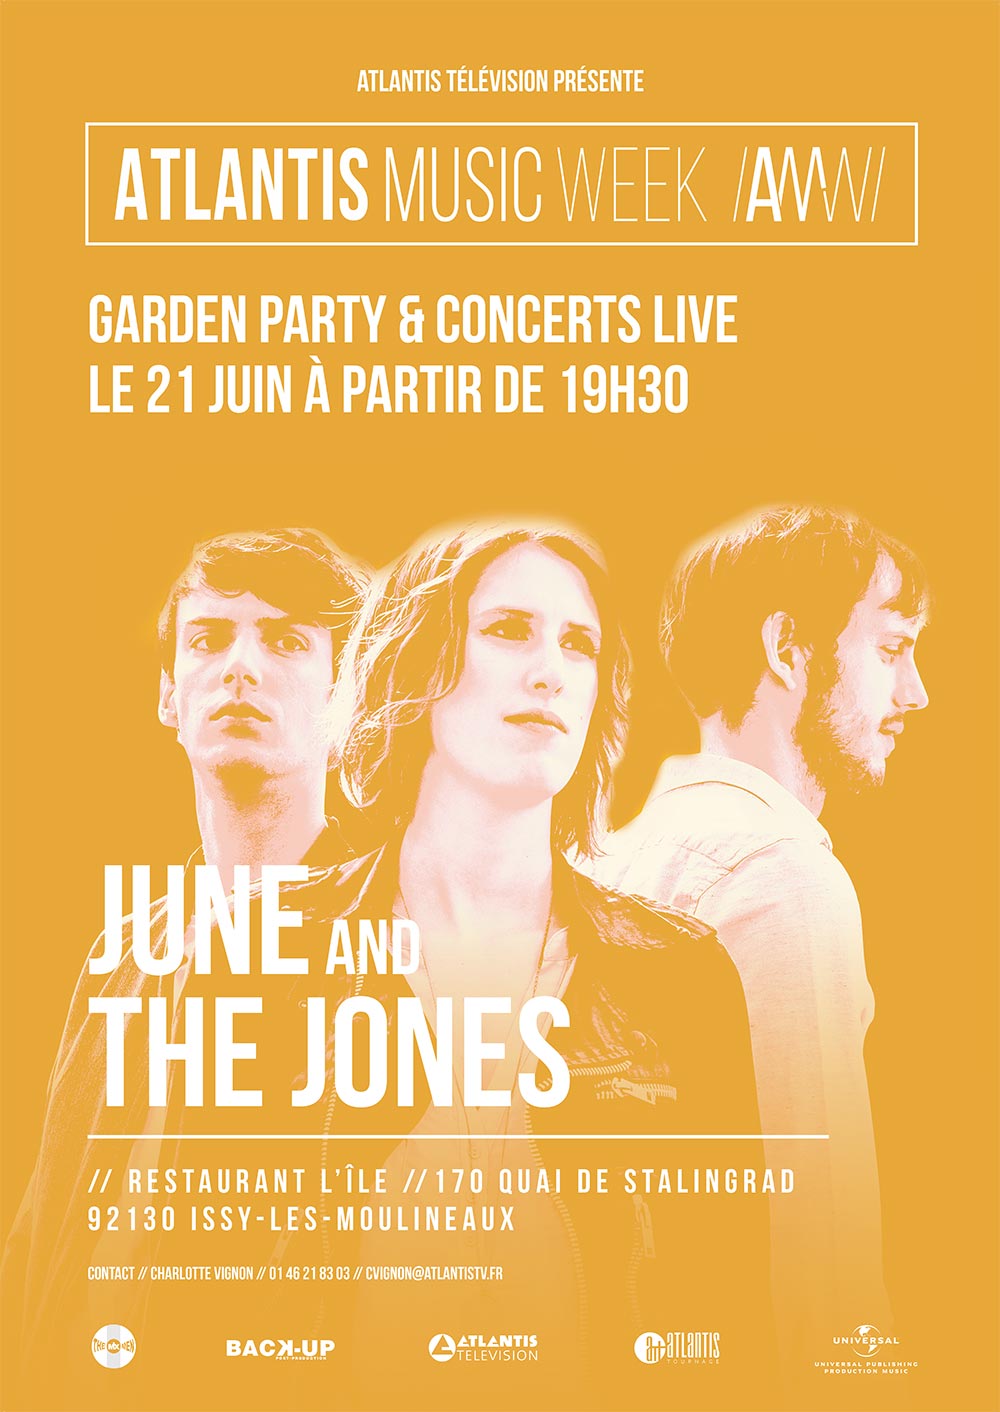 June and the Jones à la Atlantis Music Week 2017